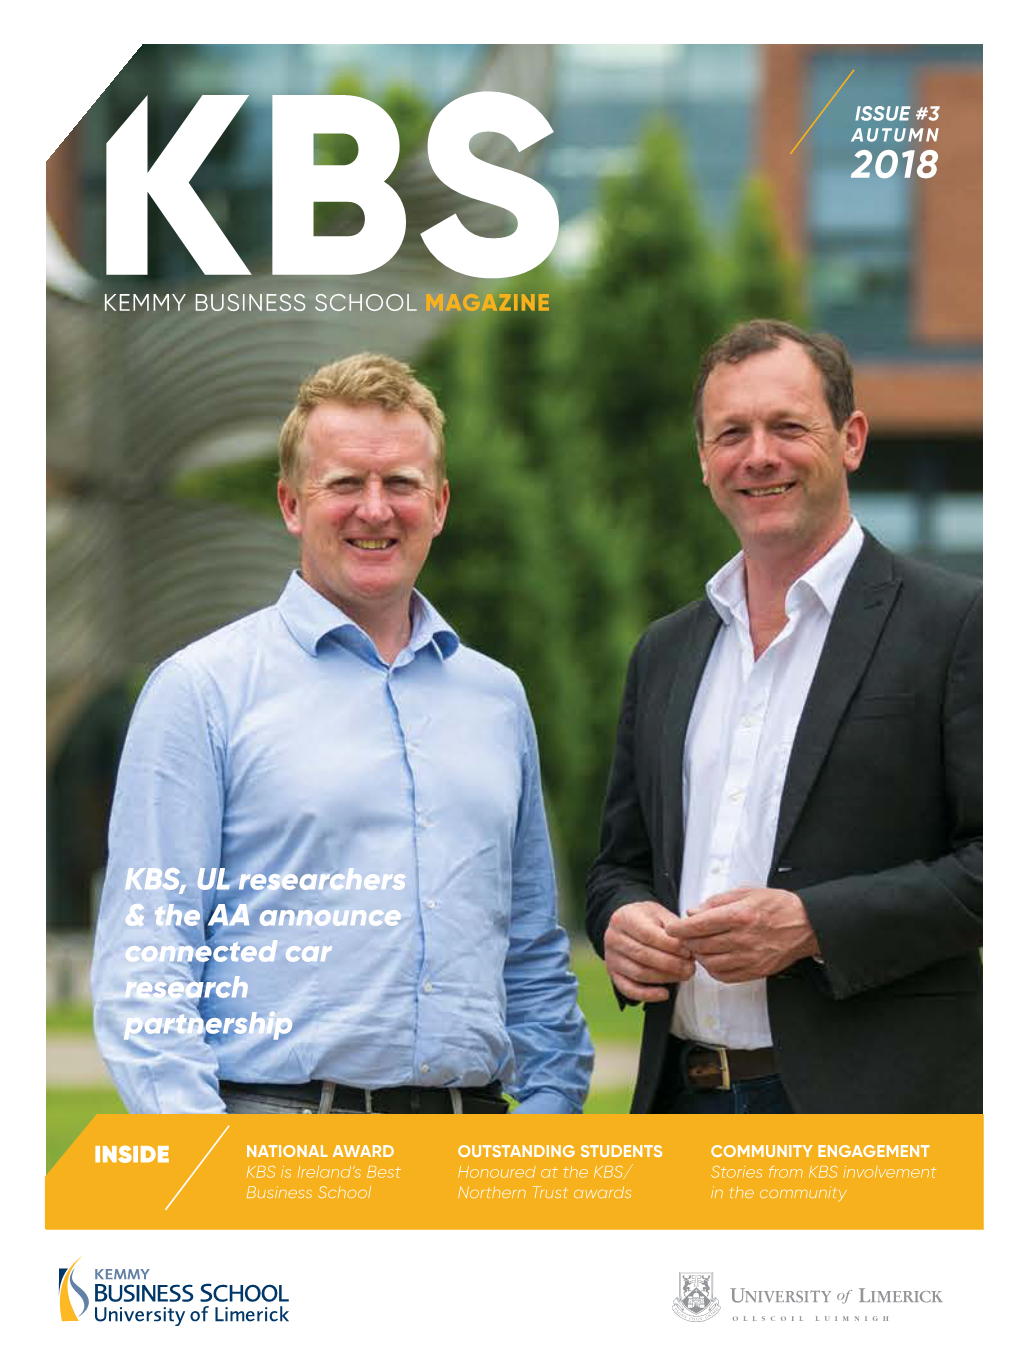 KBS Magazine Is Published by the Kemmy Business School (KBS), University of Limerick (UL)